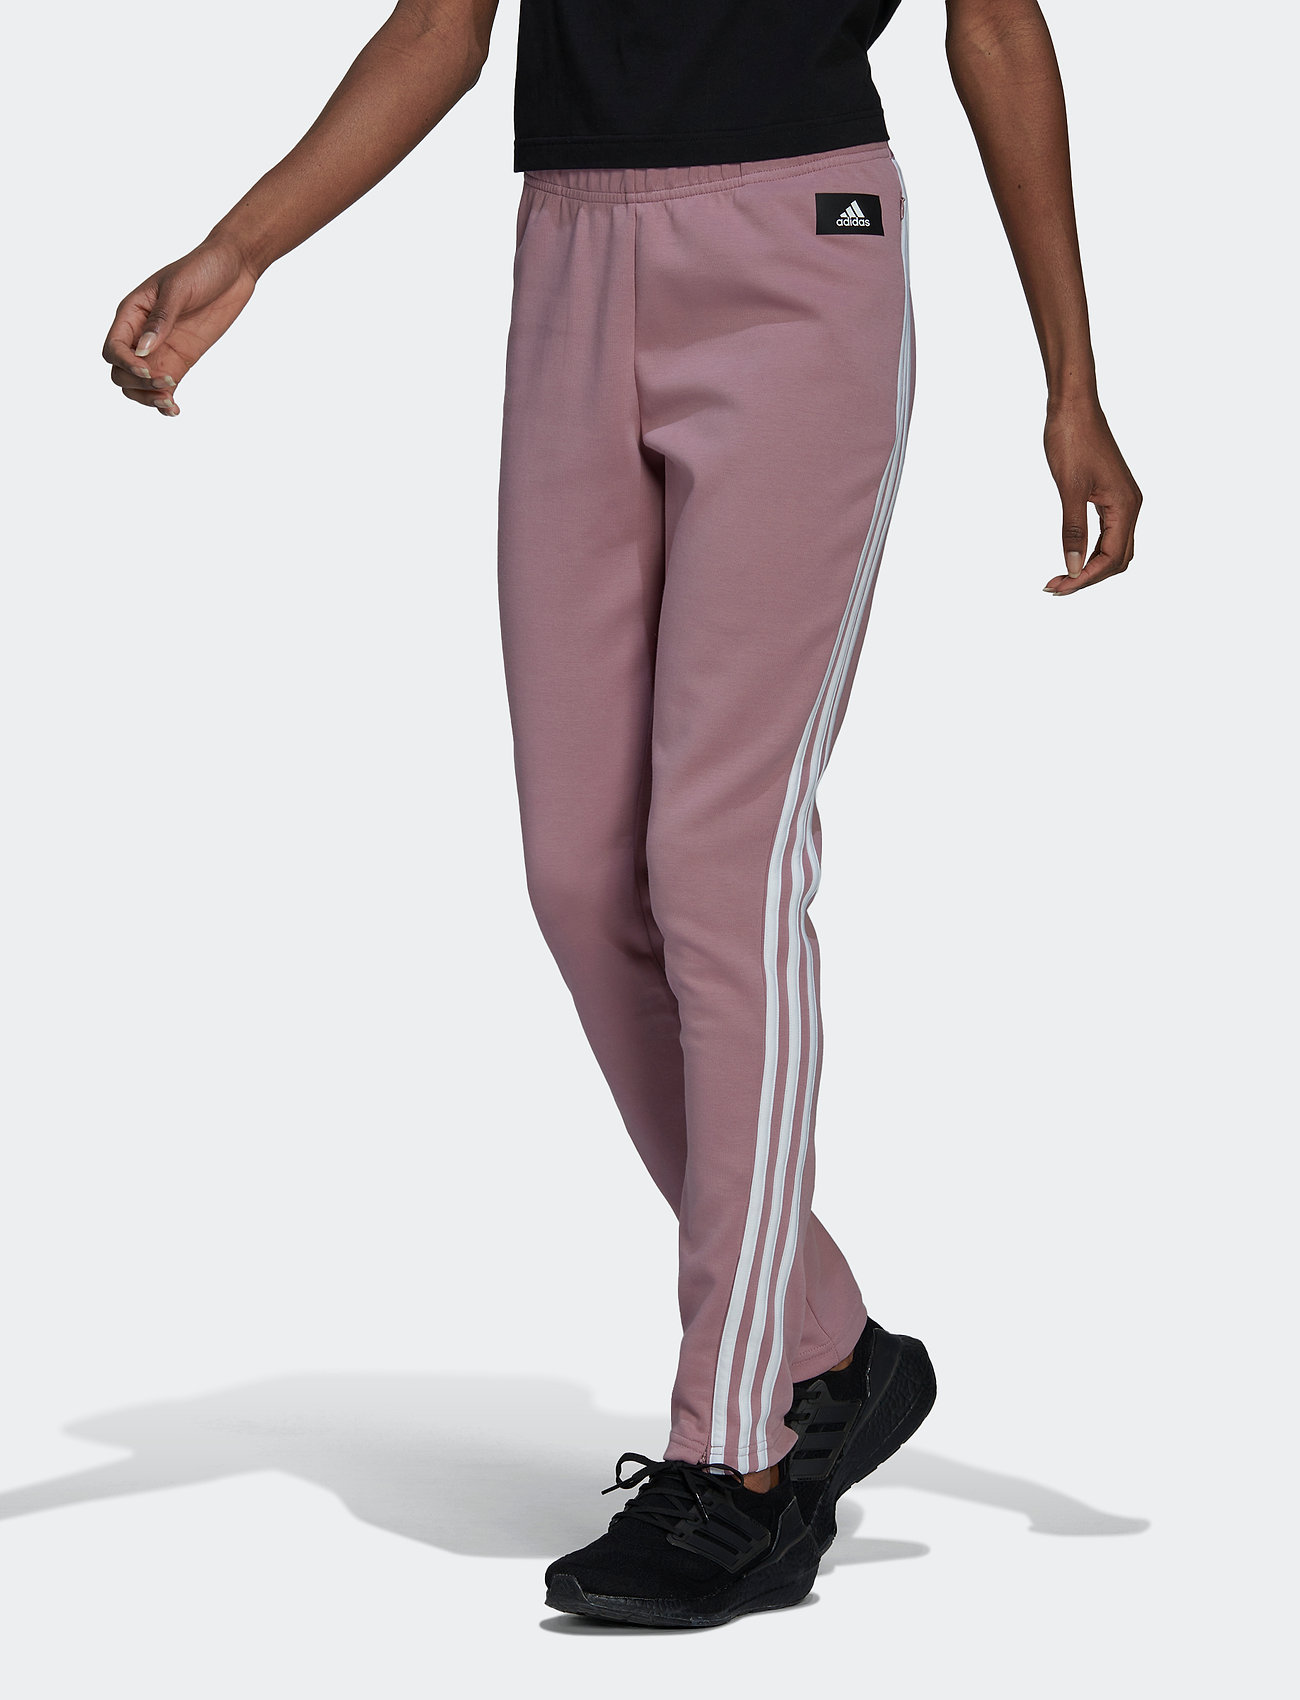 The sky chain Four adidas Performance Sportswear Future Icons 3-stripes Skinny Pants W -  Sweatpants | Boozt.com